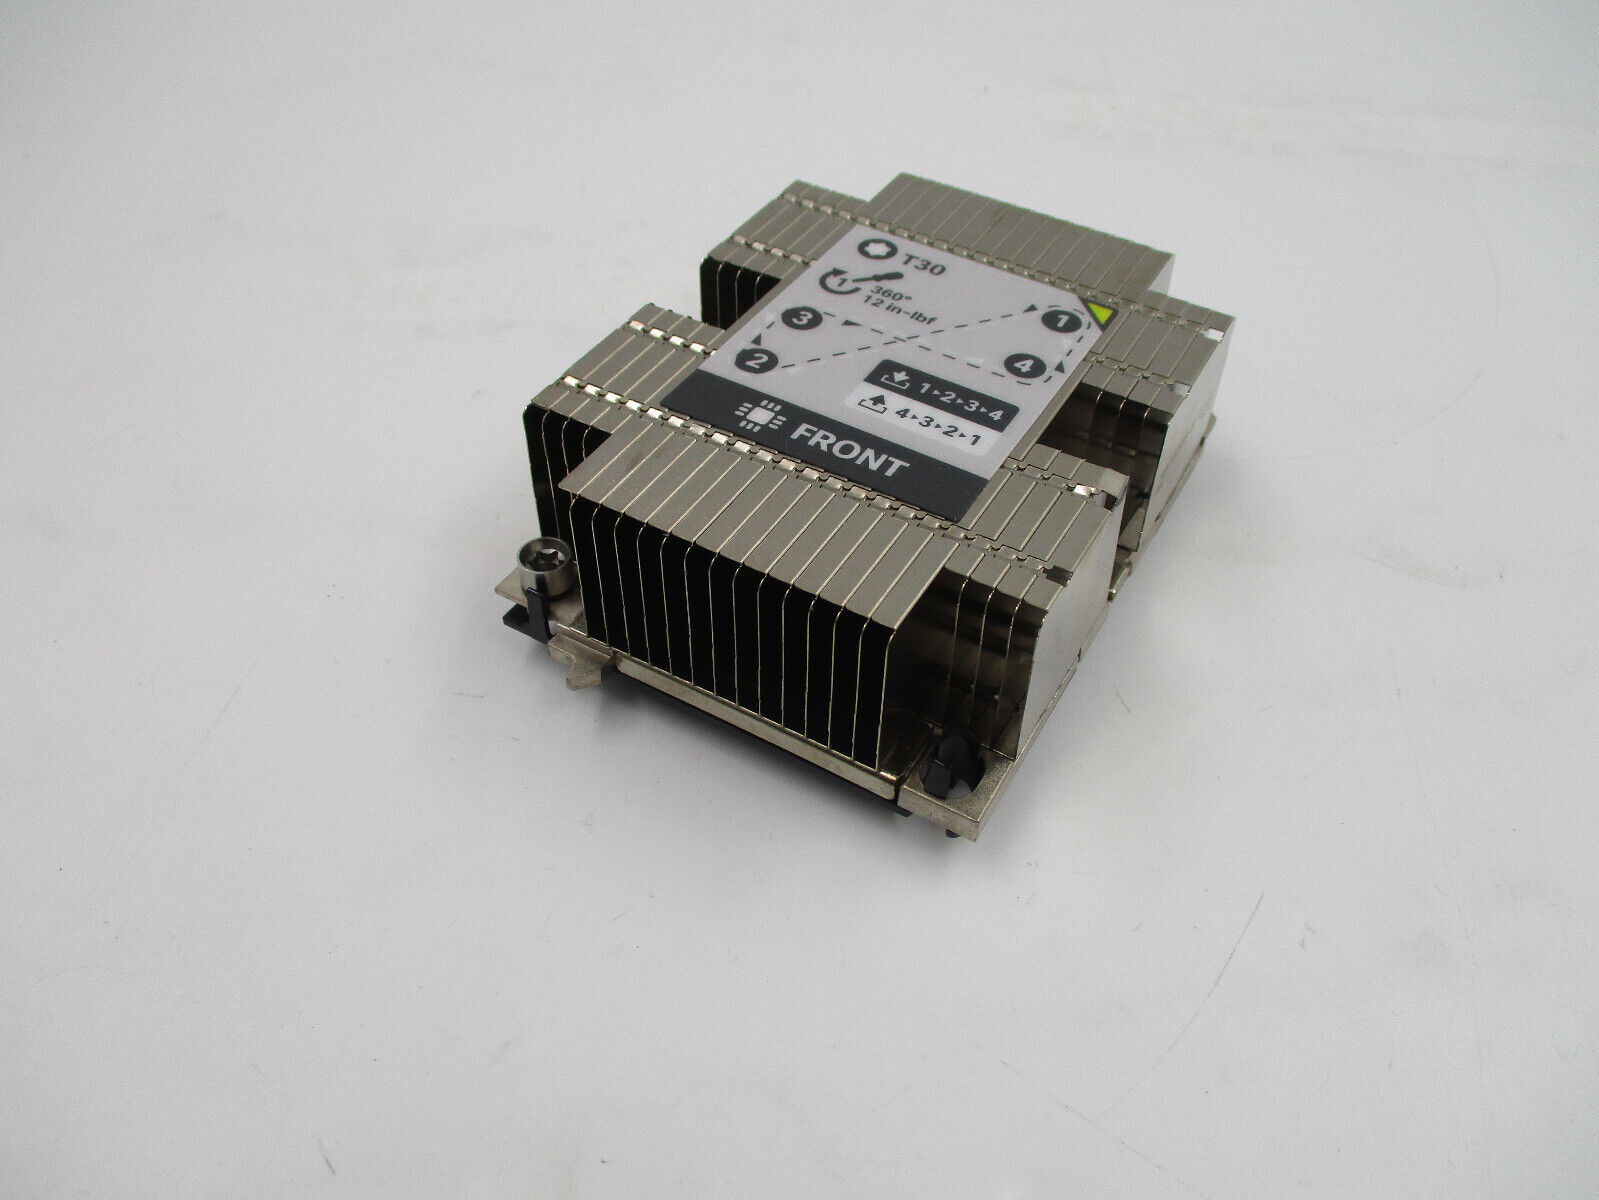 Cisco UCS C480 M5 Rack Server CPU Front Heat Sink 700-107699-02 Tested Working